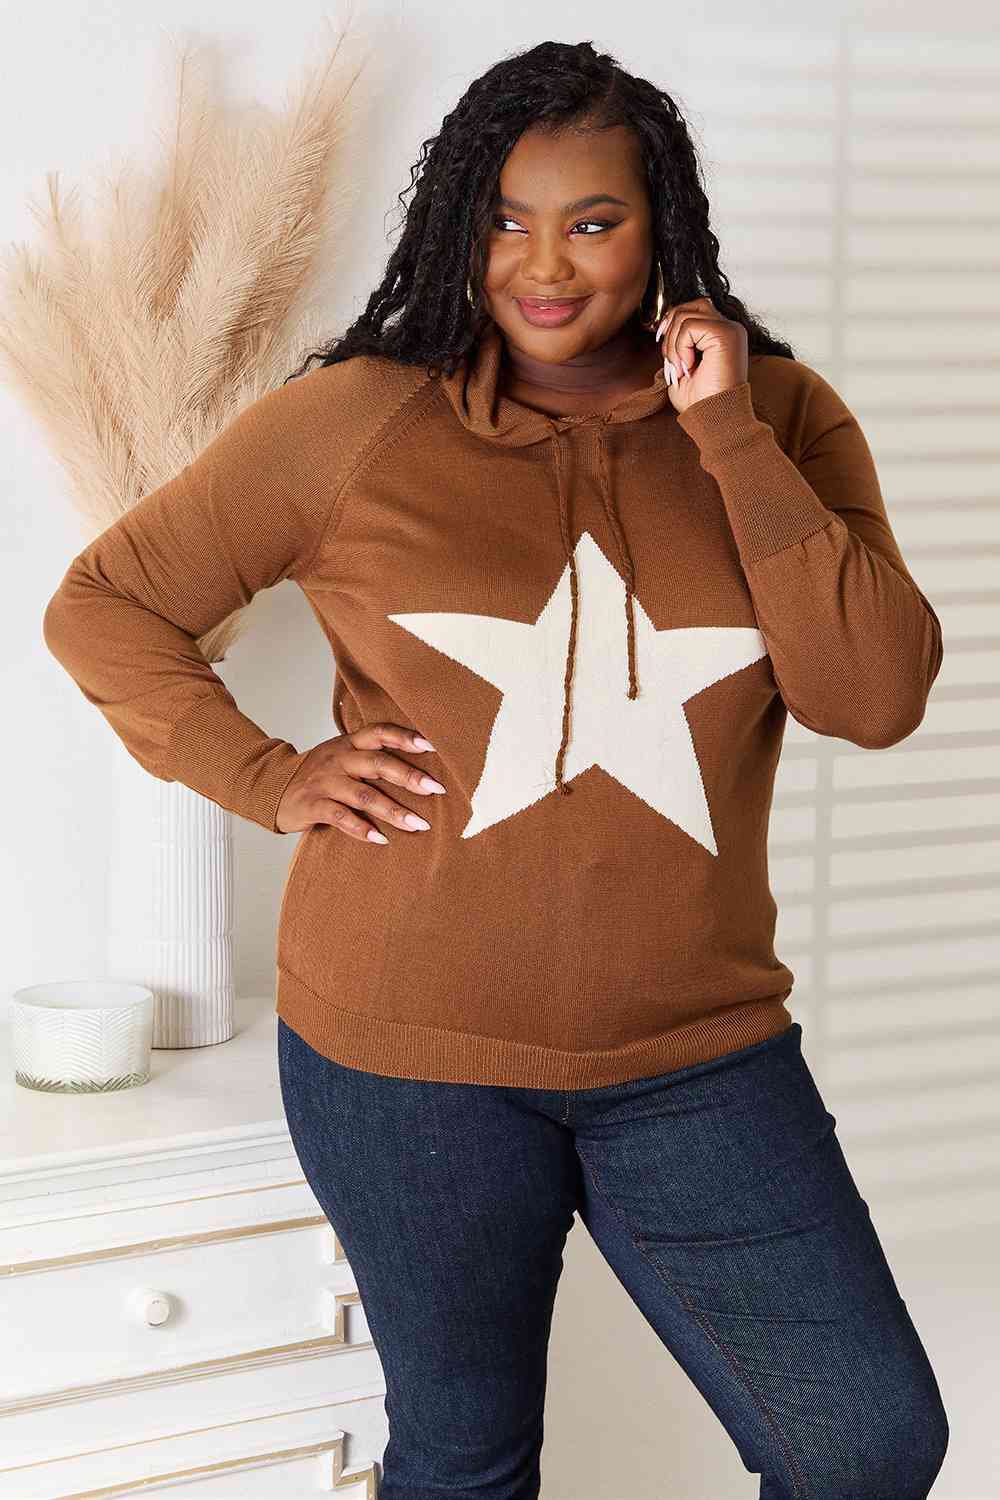 Heimish Star Graphic Hooded Sweater